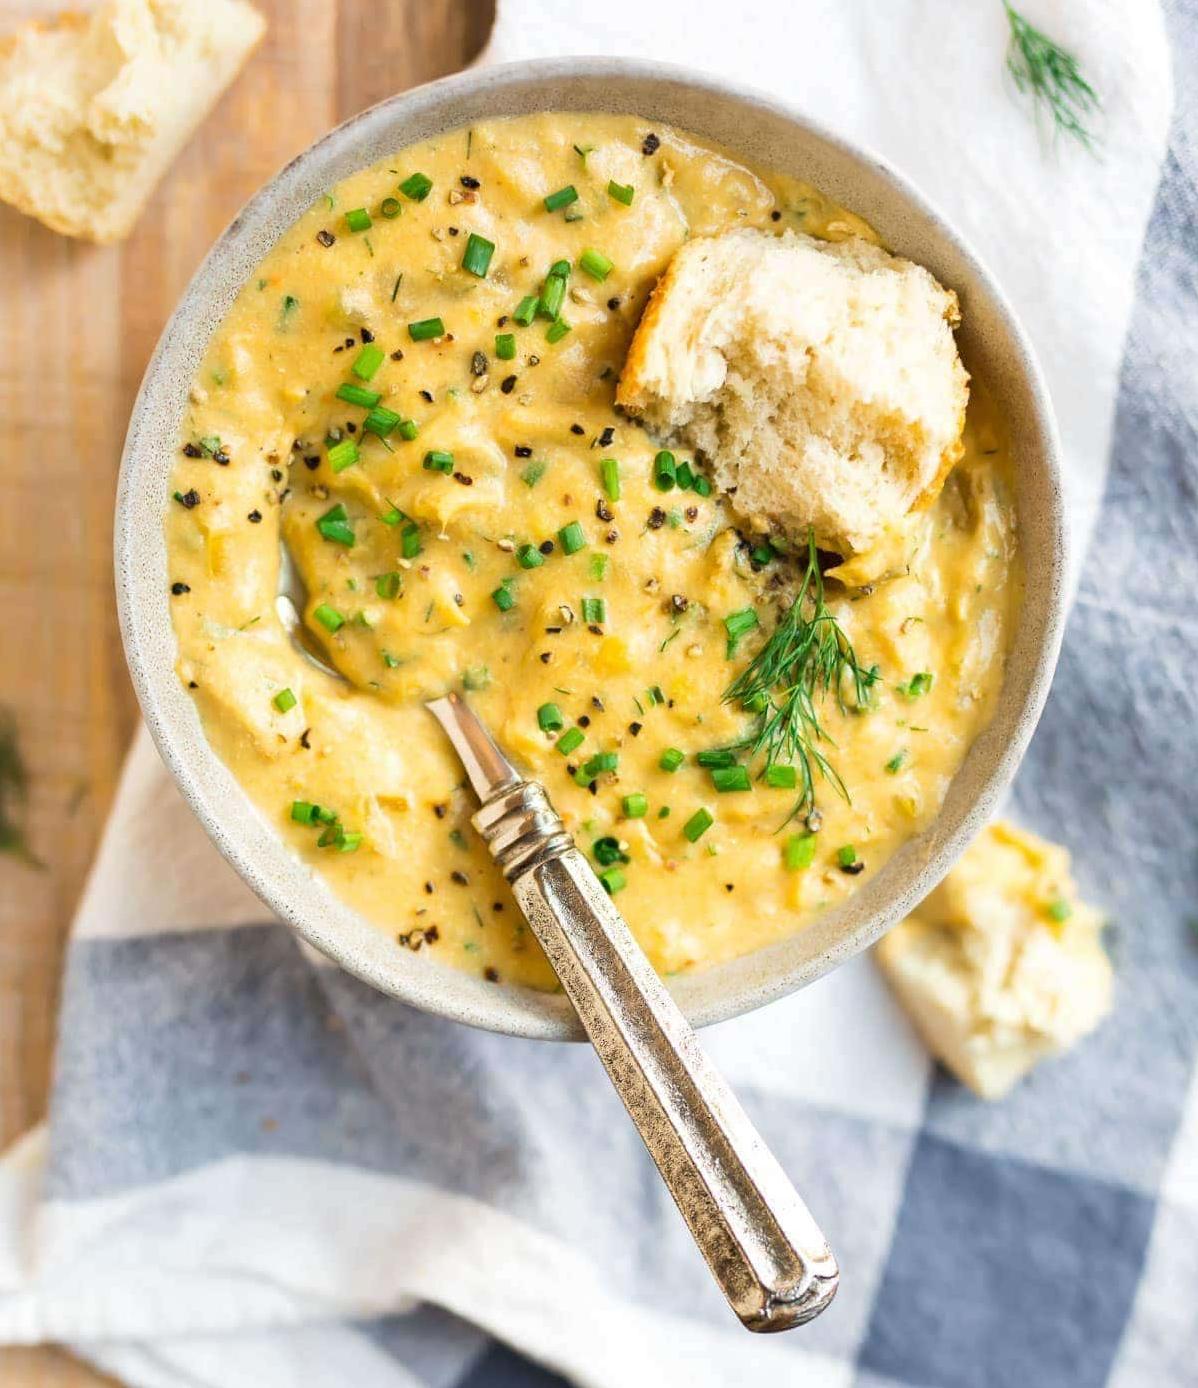  This vegan potato-leek soup is the ultimate winter warmer